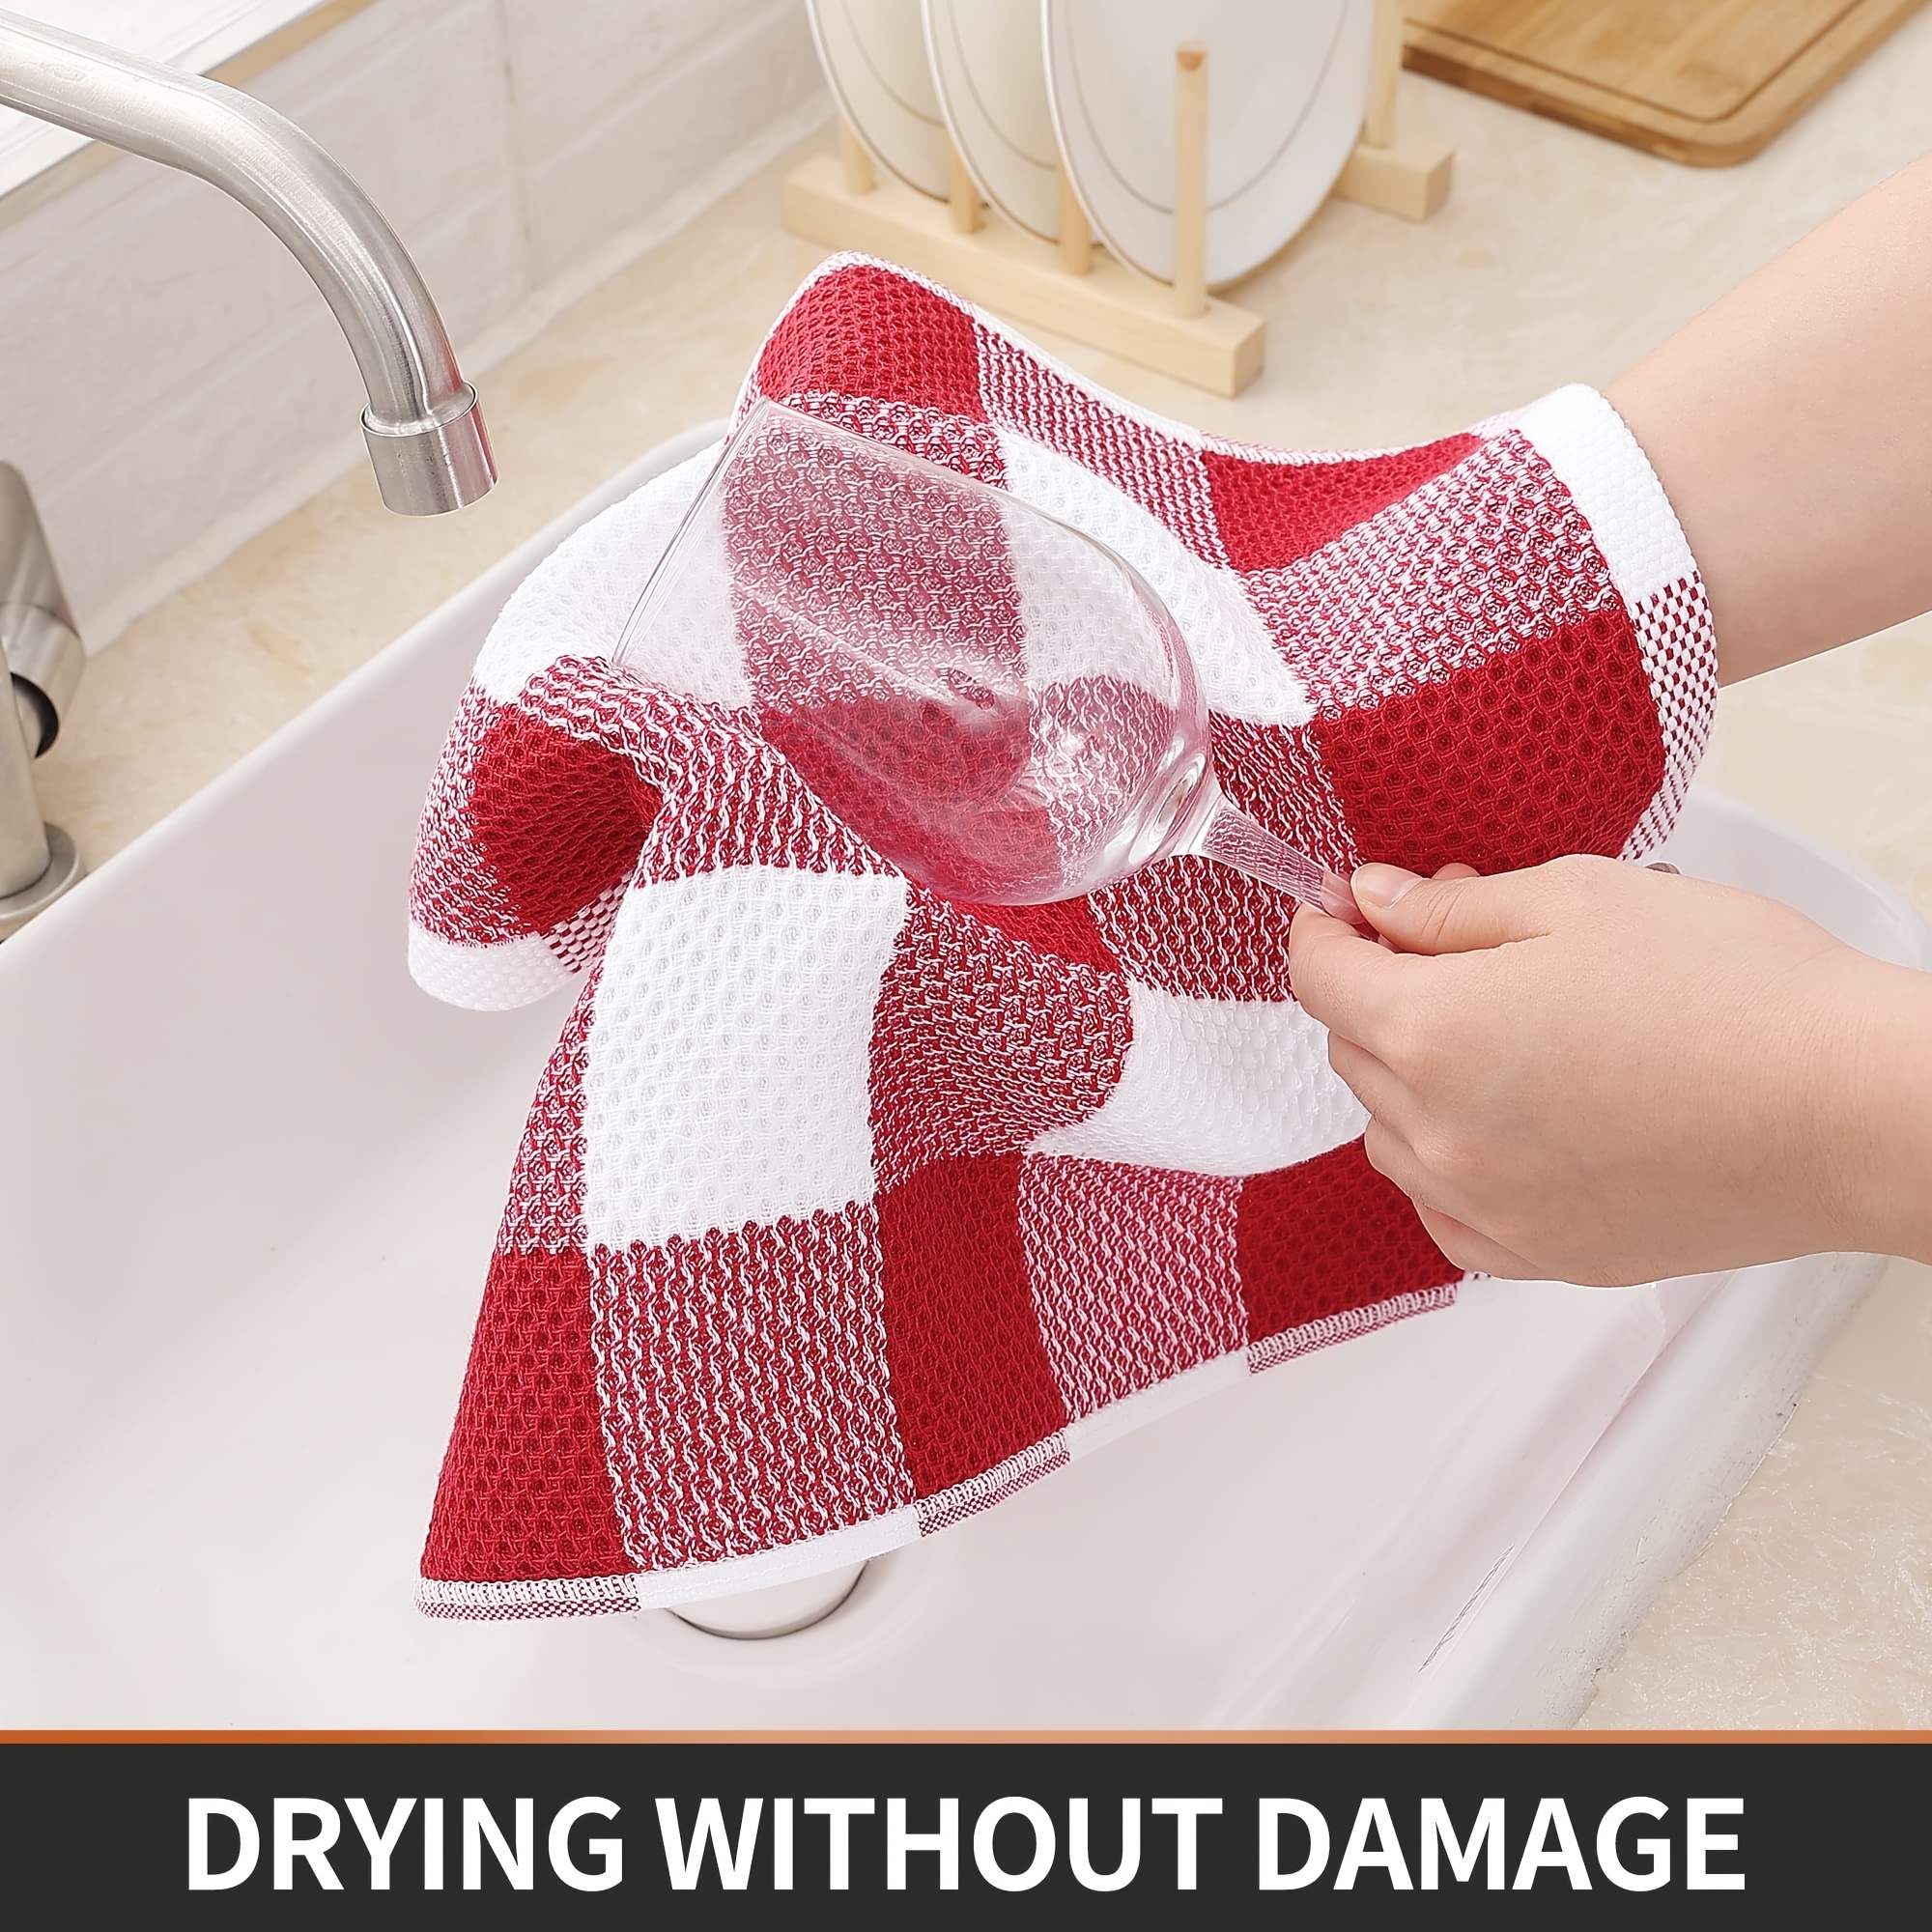 Dish Towels 4 Pcs. Kitchen Towel Soft and Absorbent Cotton Plaid